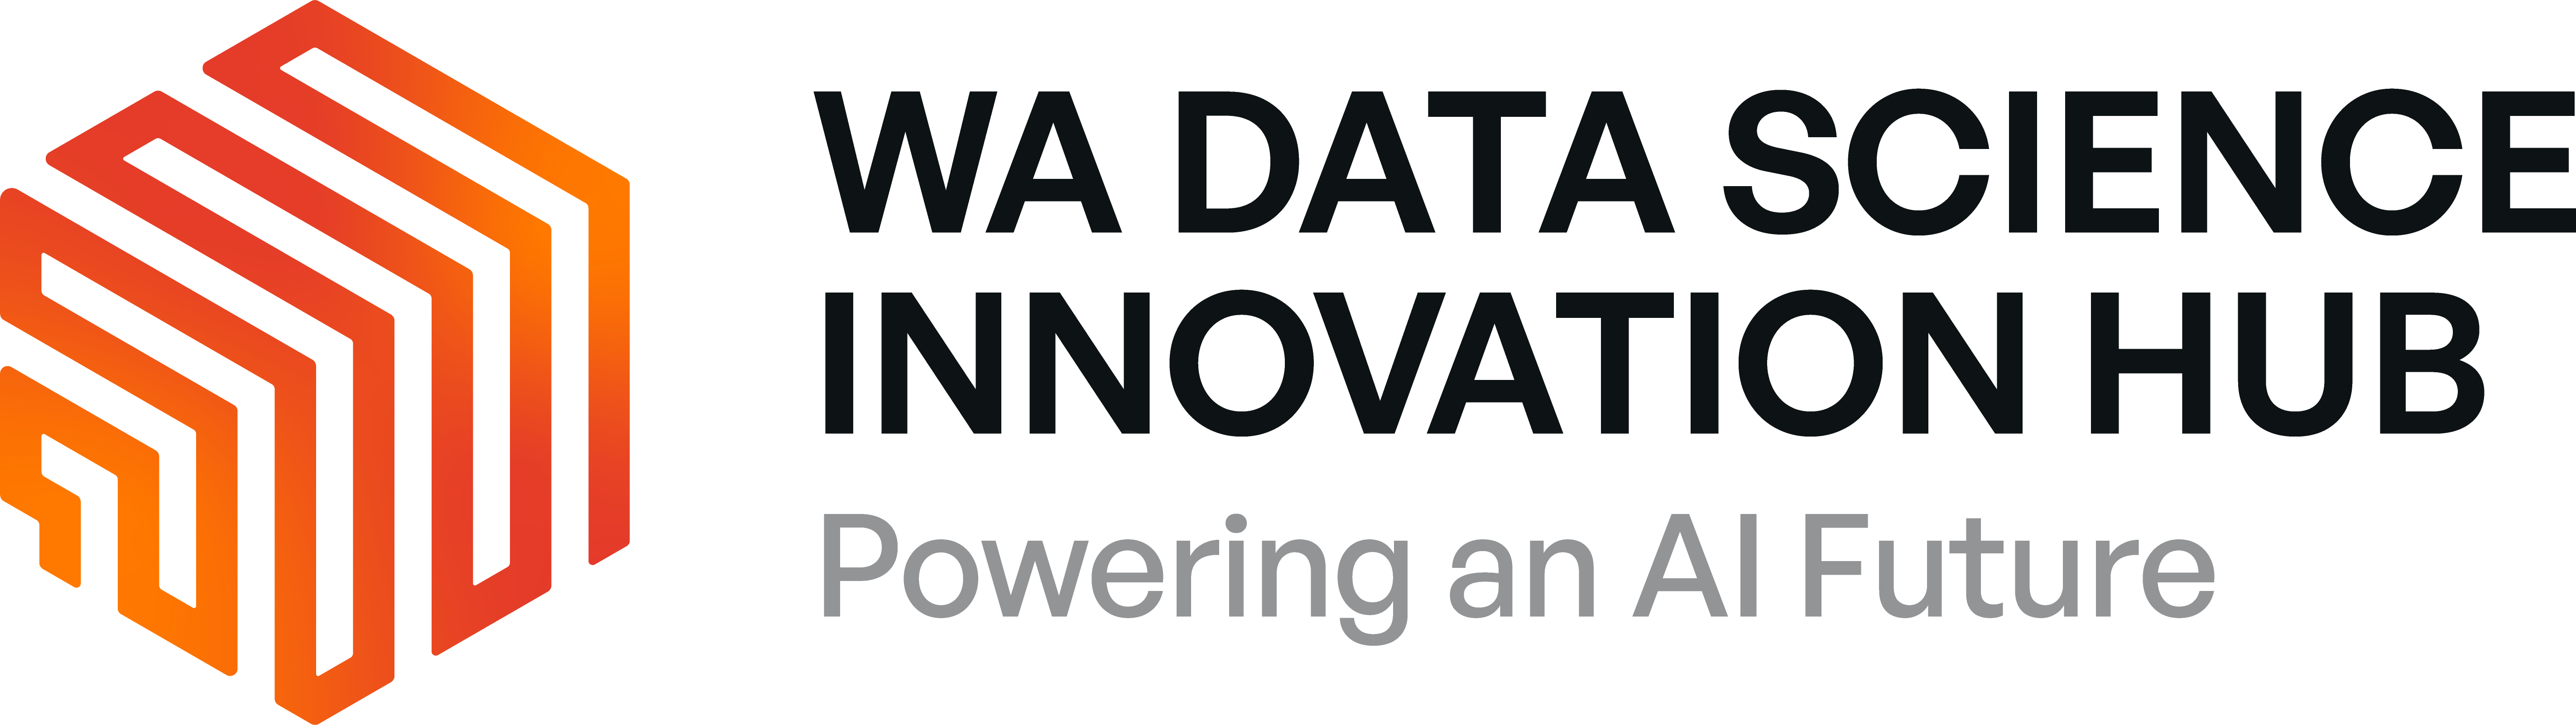 WA Data Science Innovation Hub